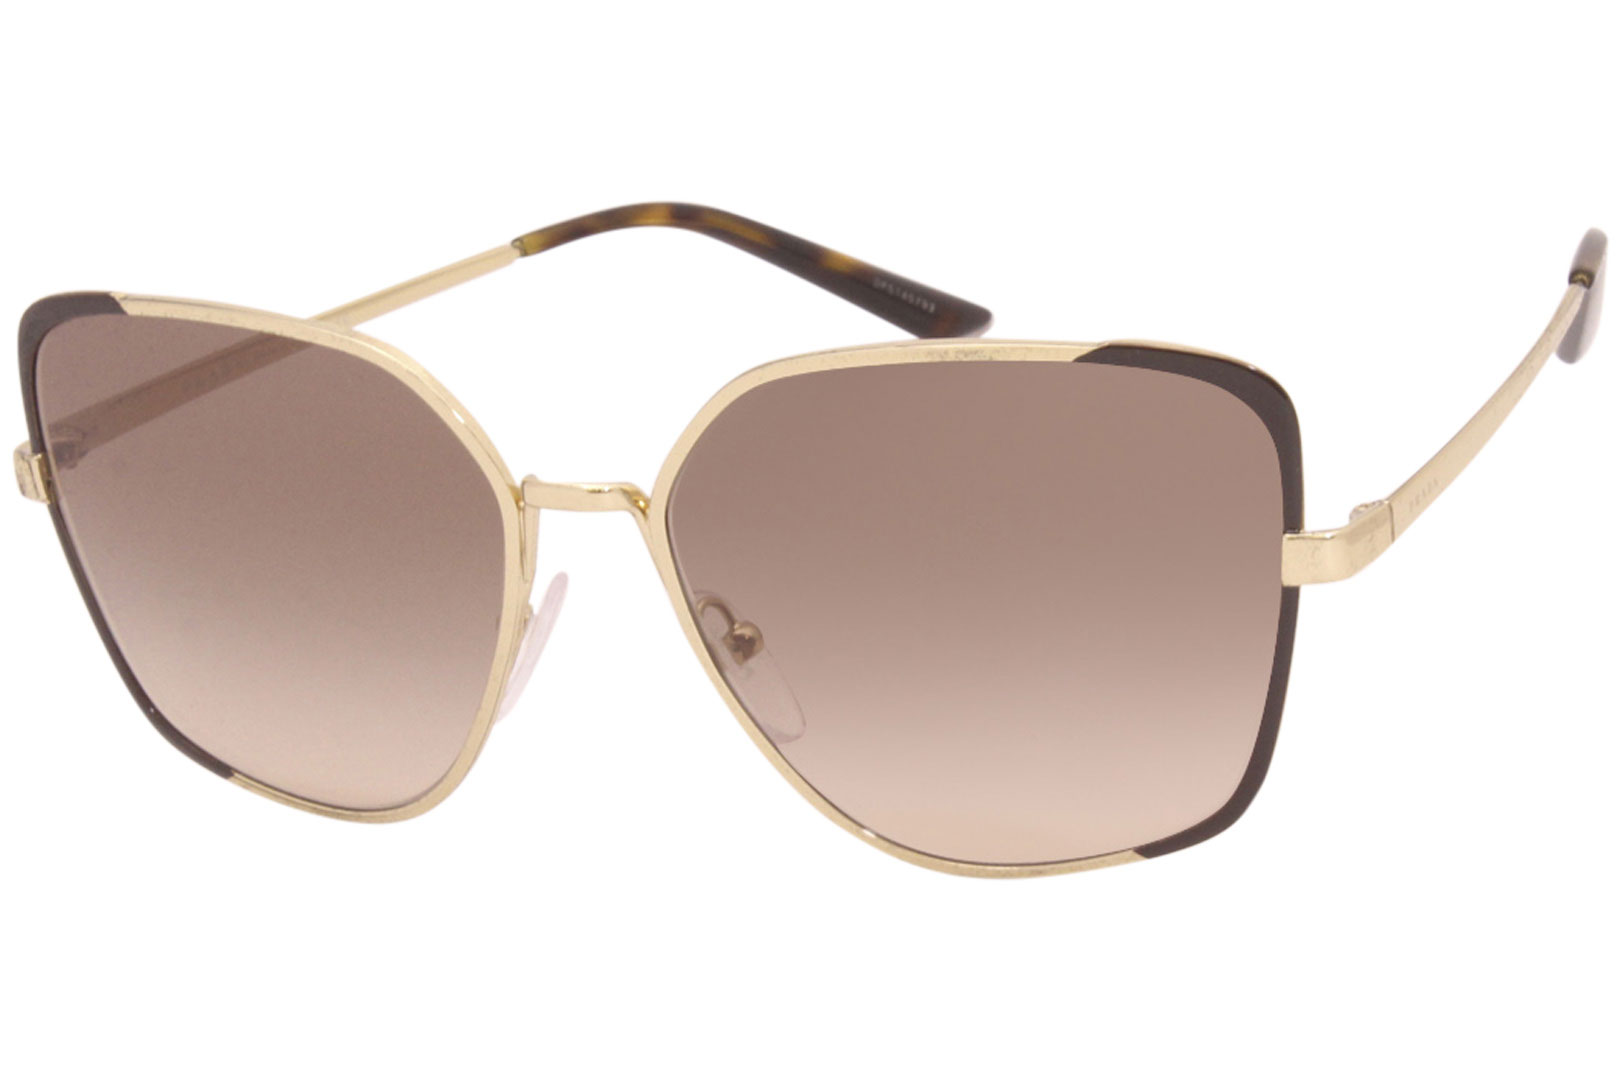 Sunglasses Women's KOF-3D0 Pale Gold-Brown/Brown Gradient | EyeSpecs.com